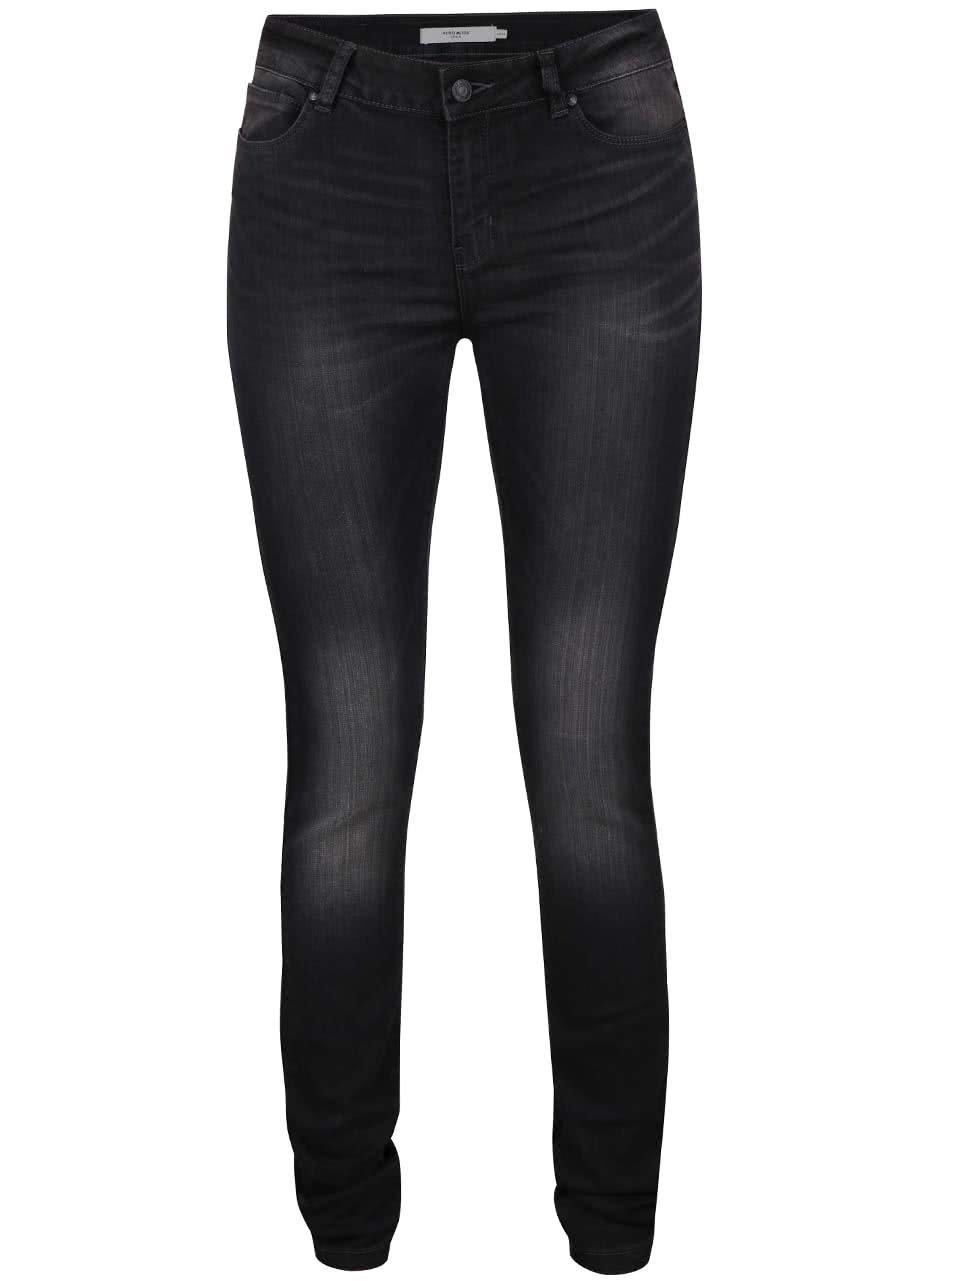 Tmavě šedé slim fit džíny s vyšisovaným efektem Vero Moda Seven